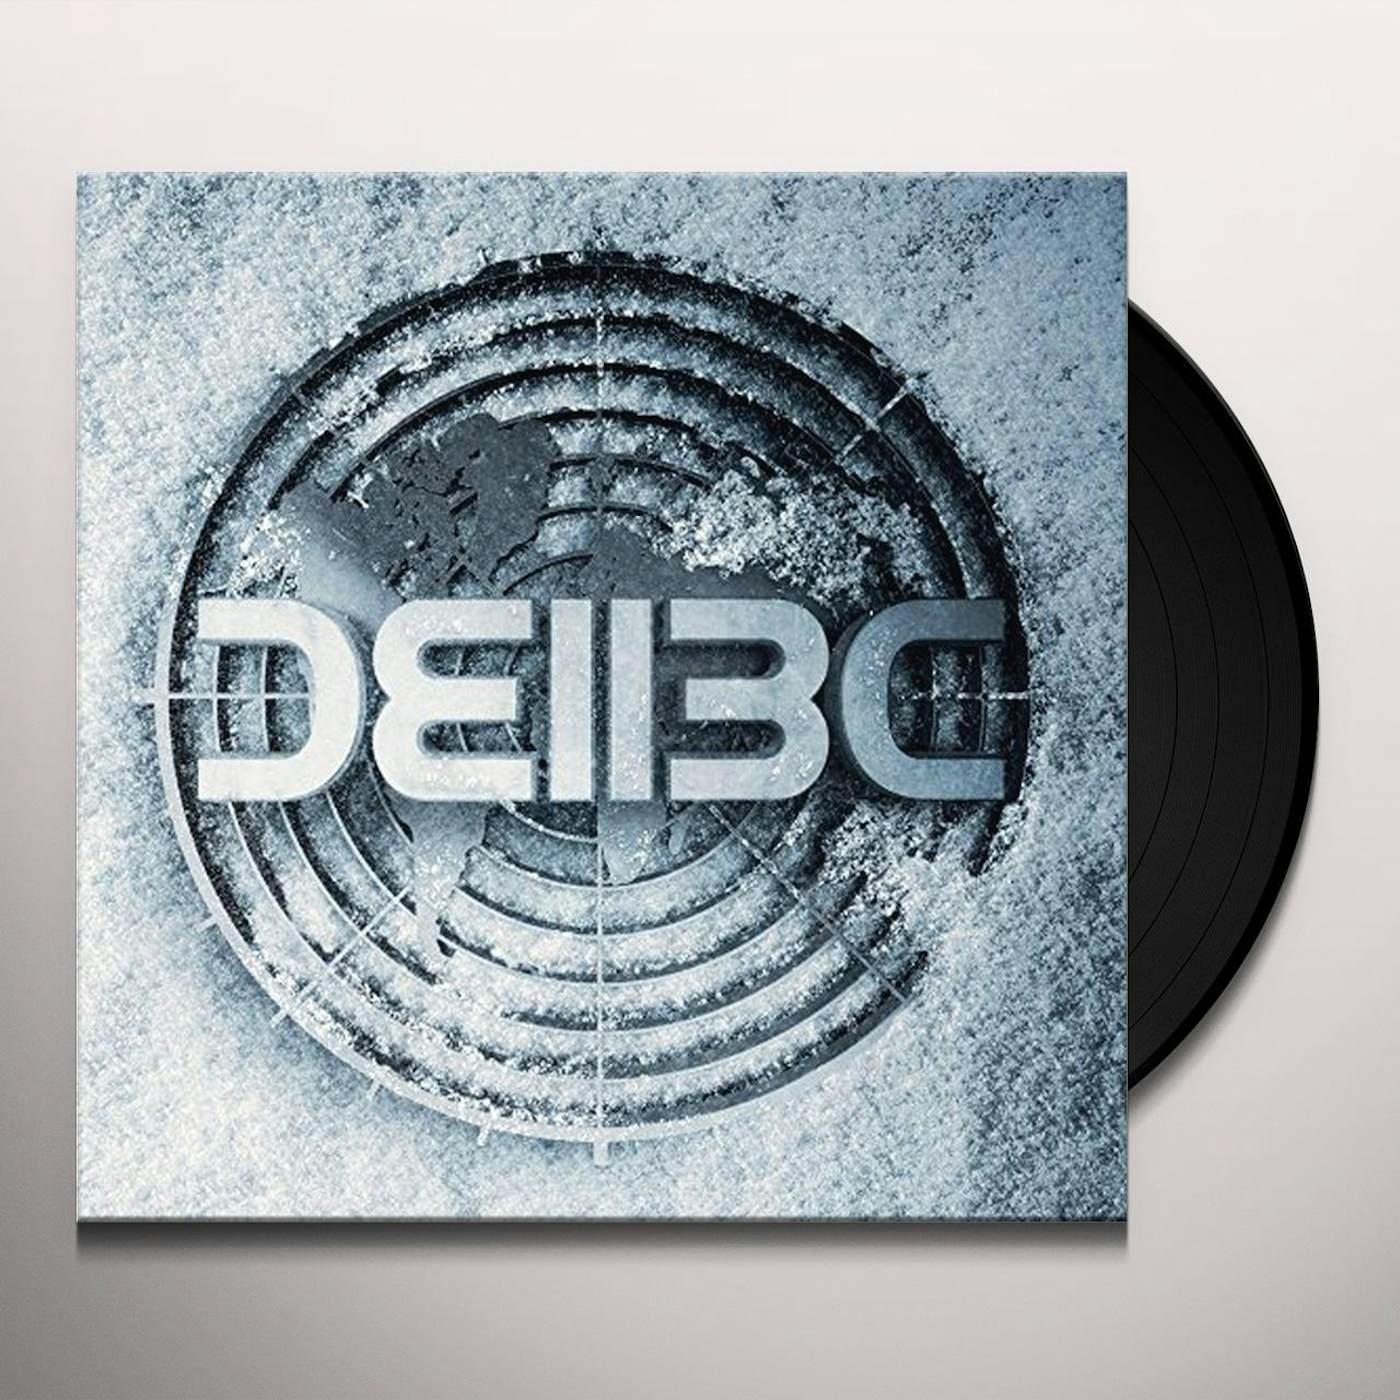 Bad Company UK Ice Station Zero Vinyl Record